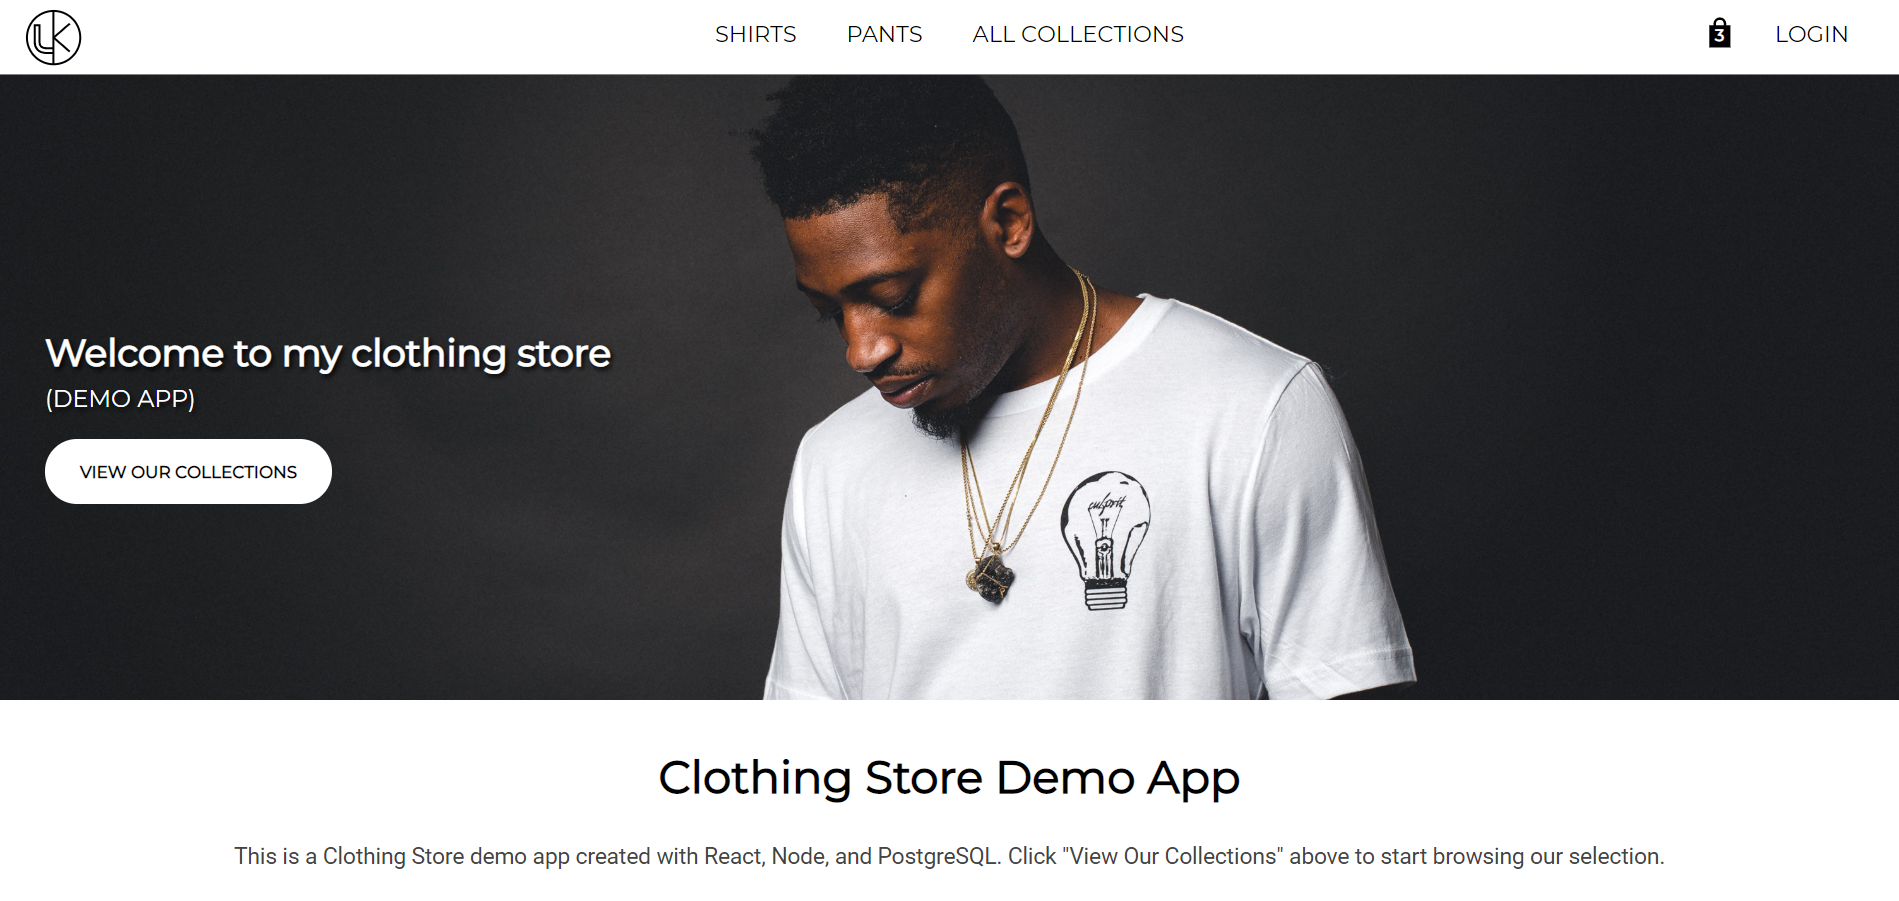 Clothing Store Demo App Screenshot